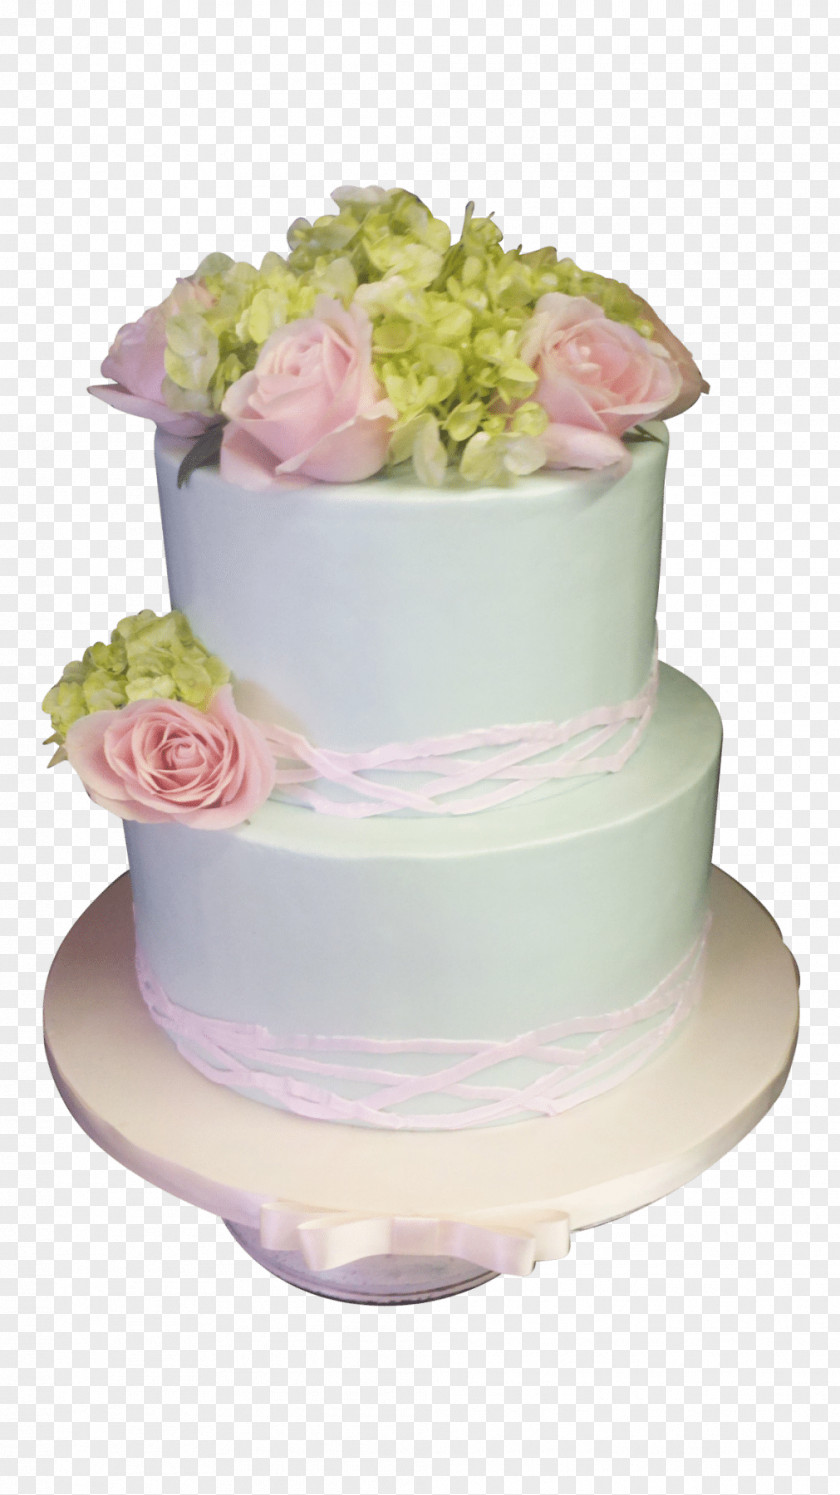 Wedding Cake Decorating Buttercream Royal Icing PNG